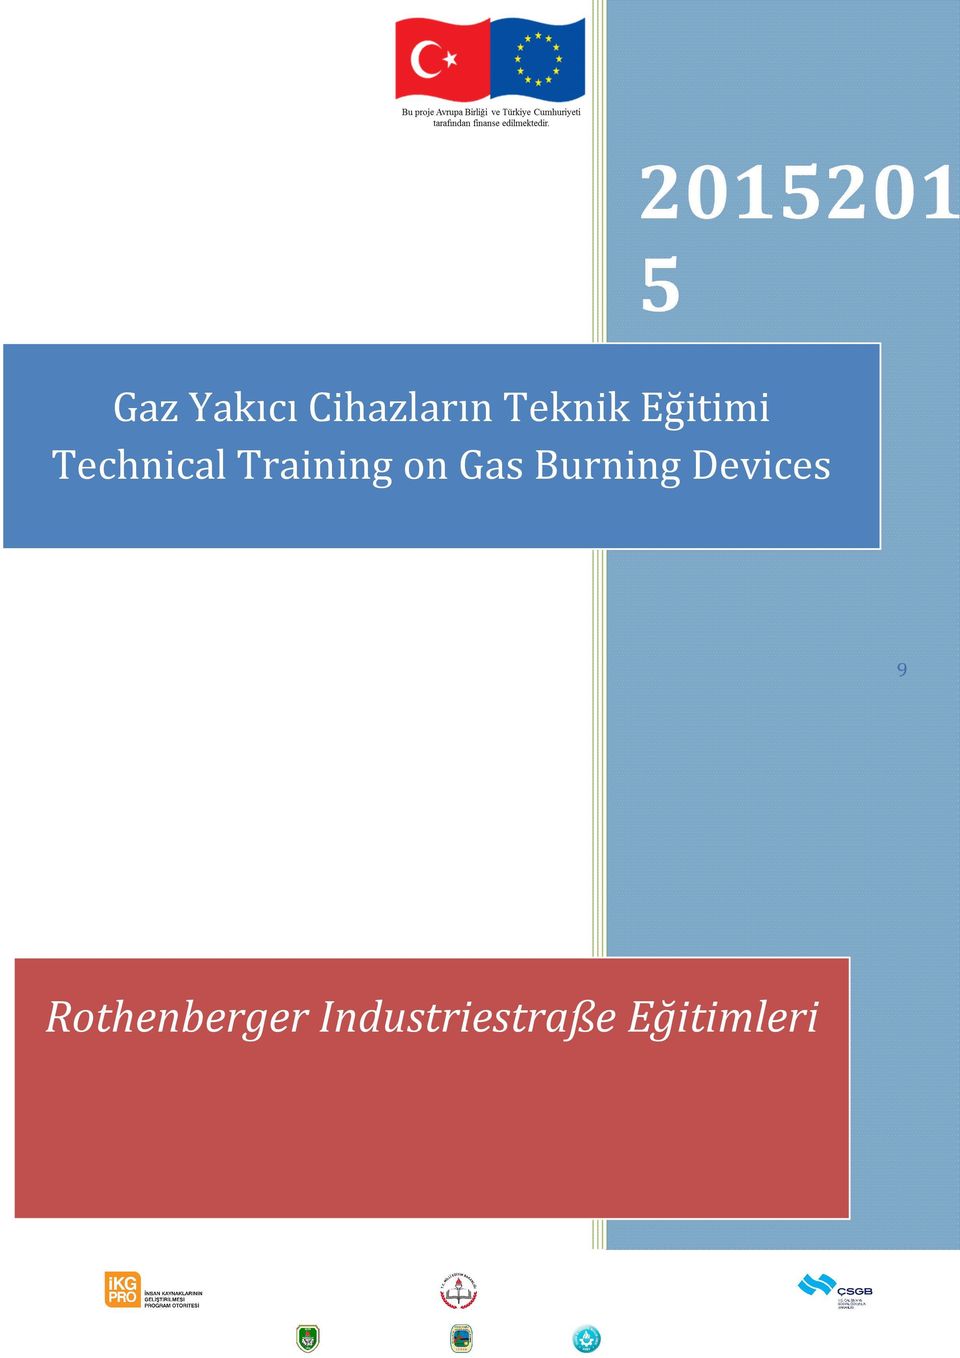 Training on Gas Burning Devices